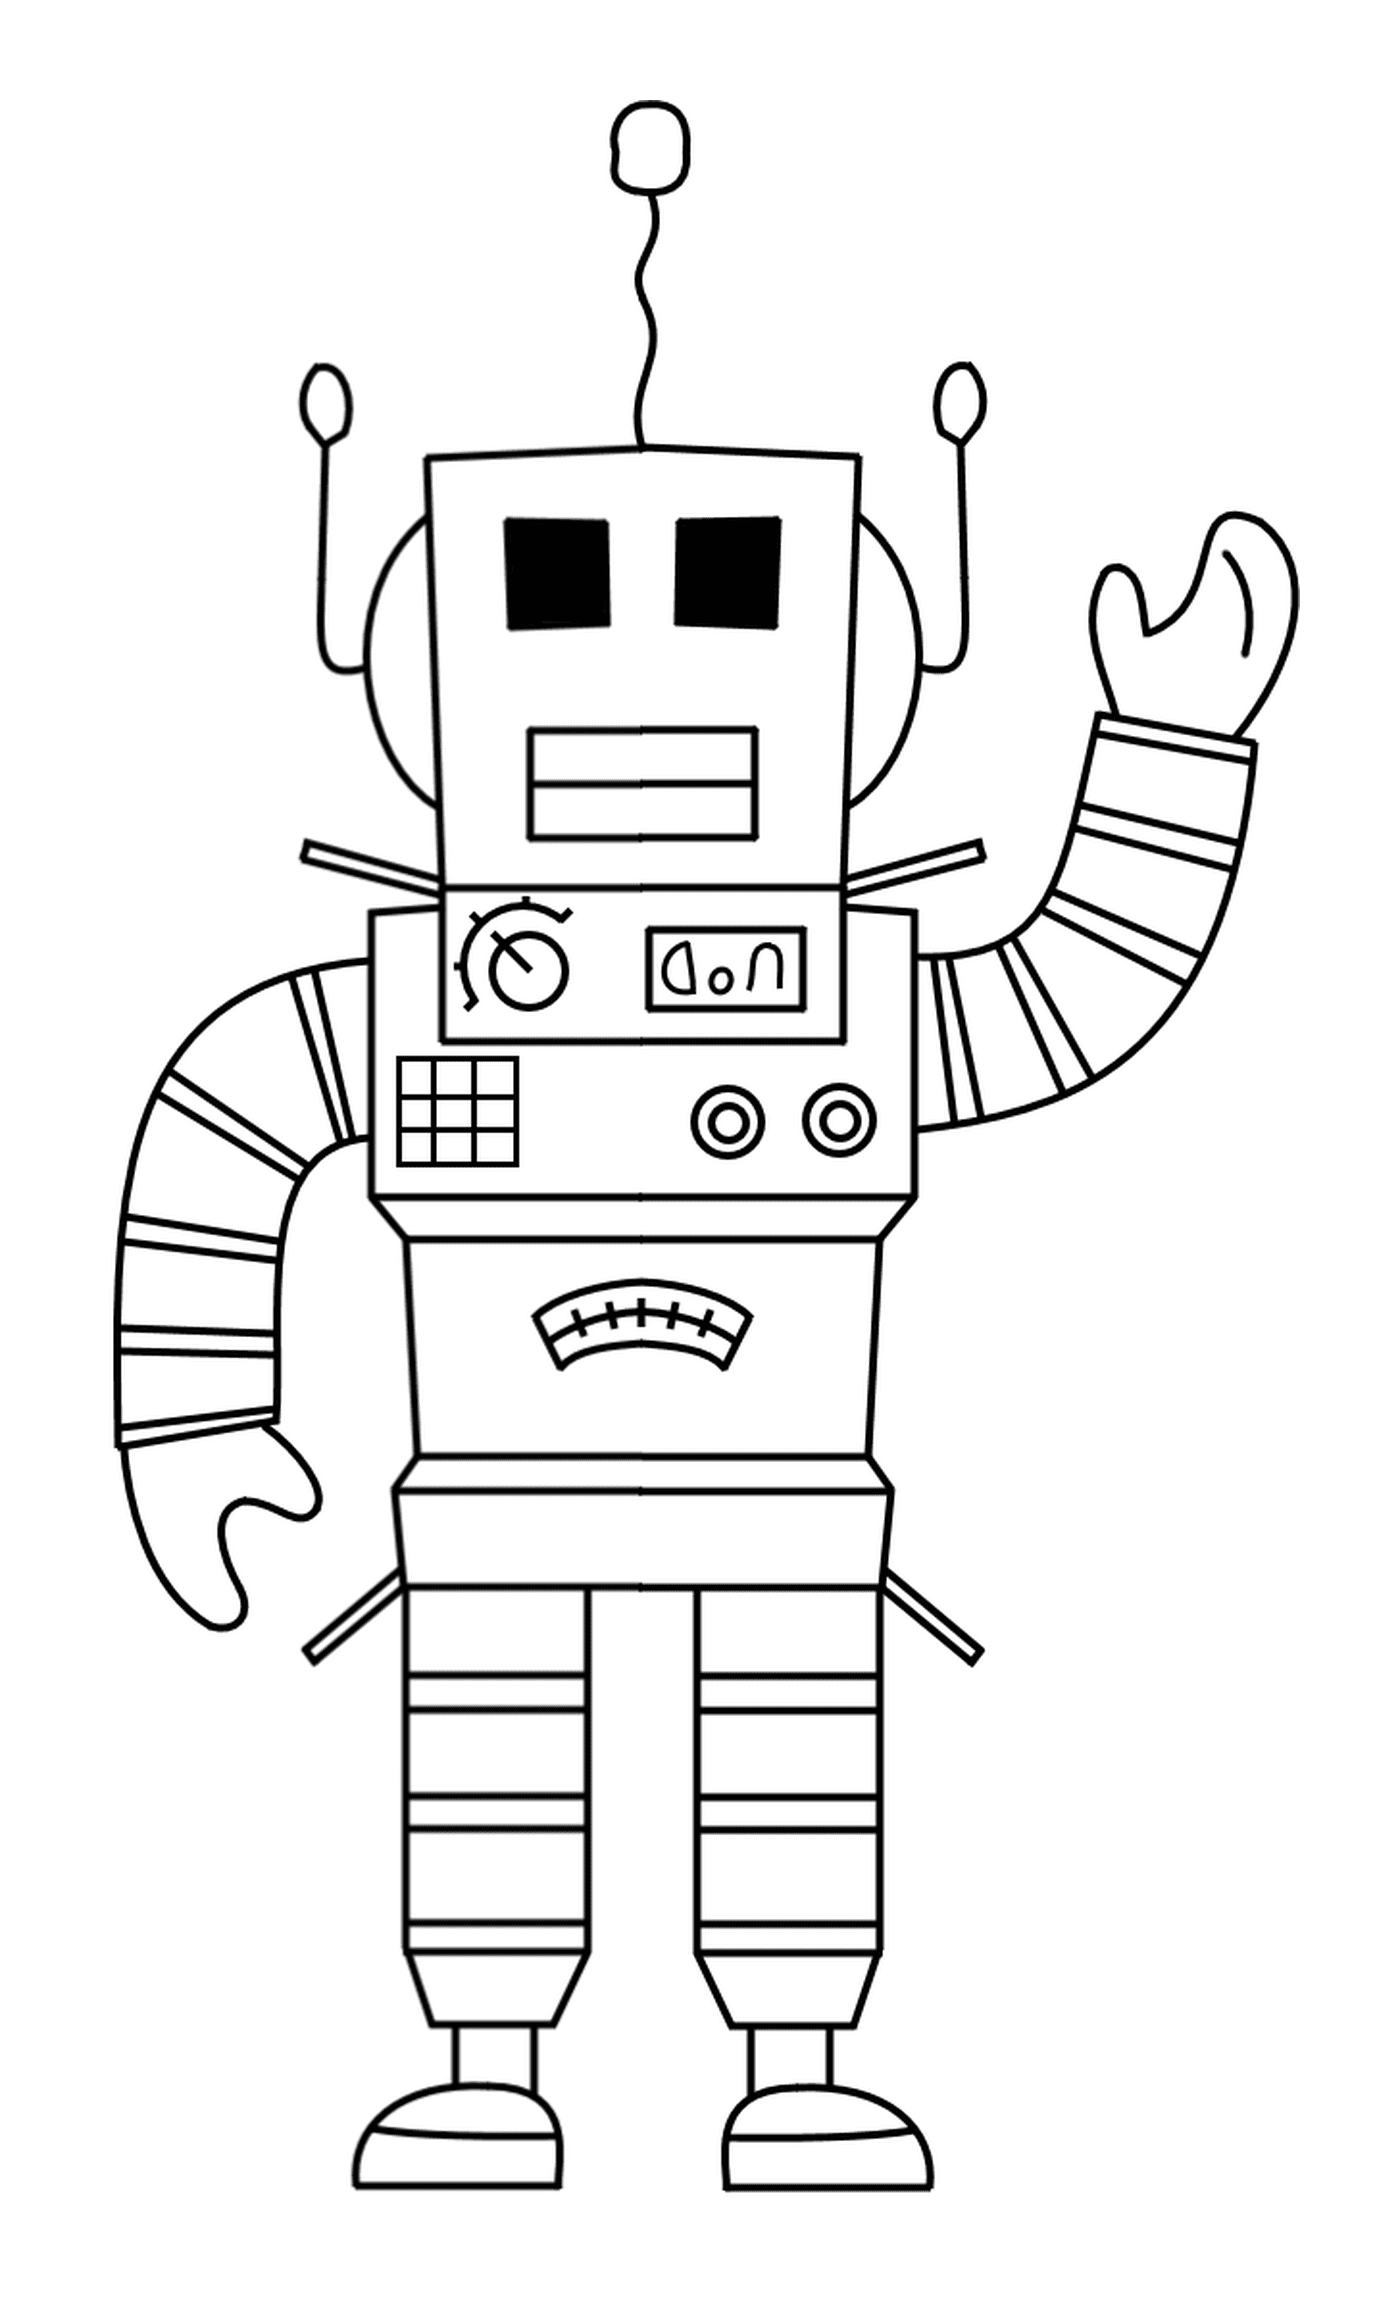  Robot Roblox che saluta 